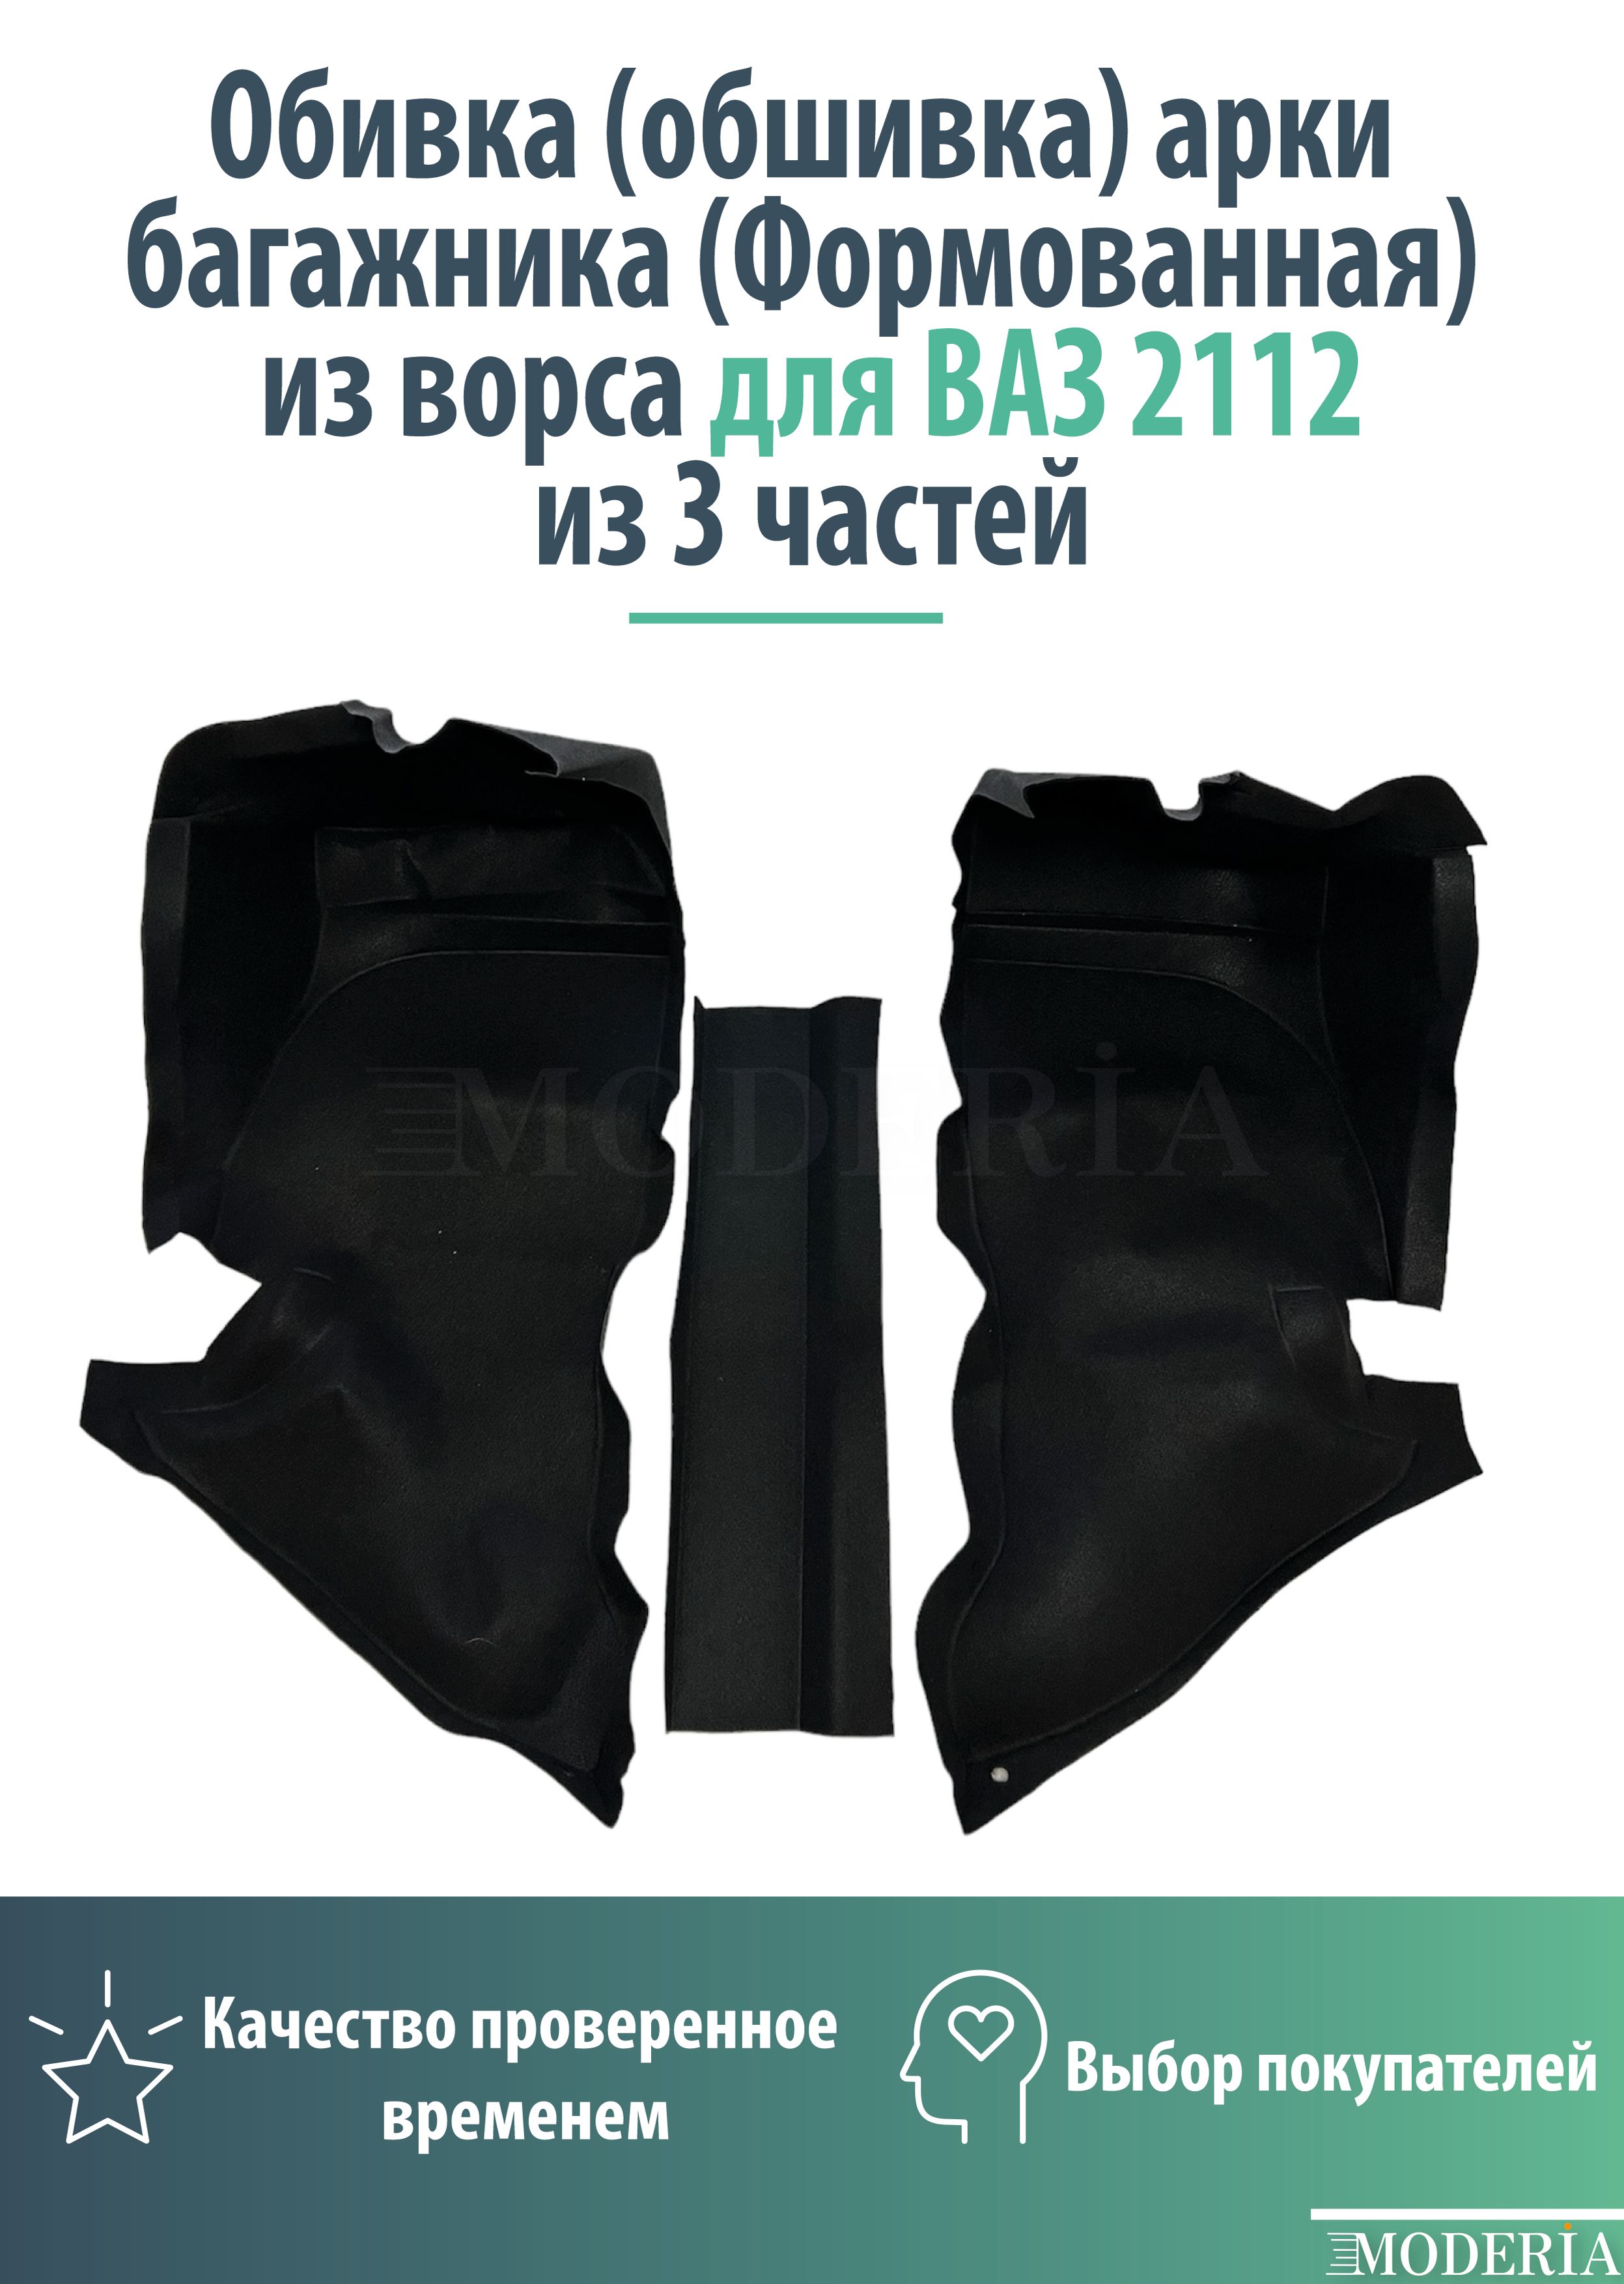 Купить обшивки дверей ВАЗ , , , черного цвета, люкс 2 | цена manikyrsha.ru